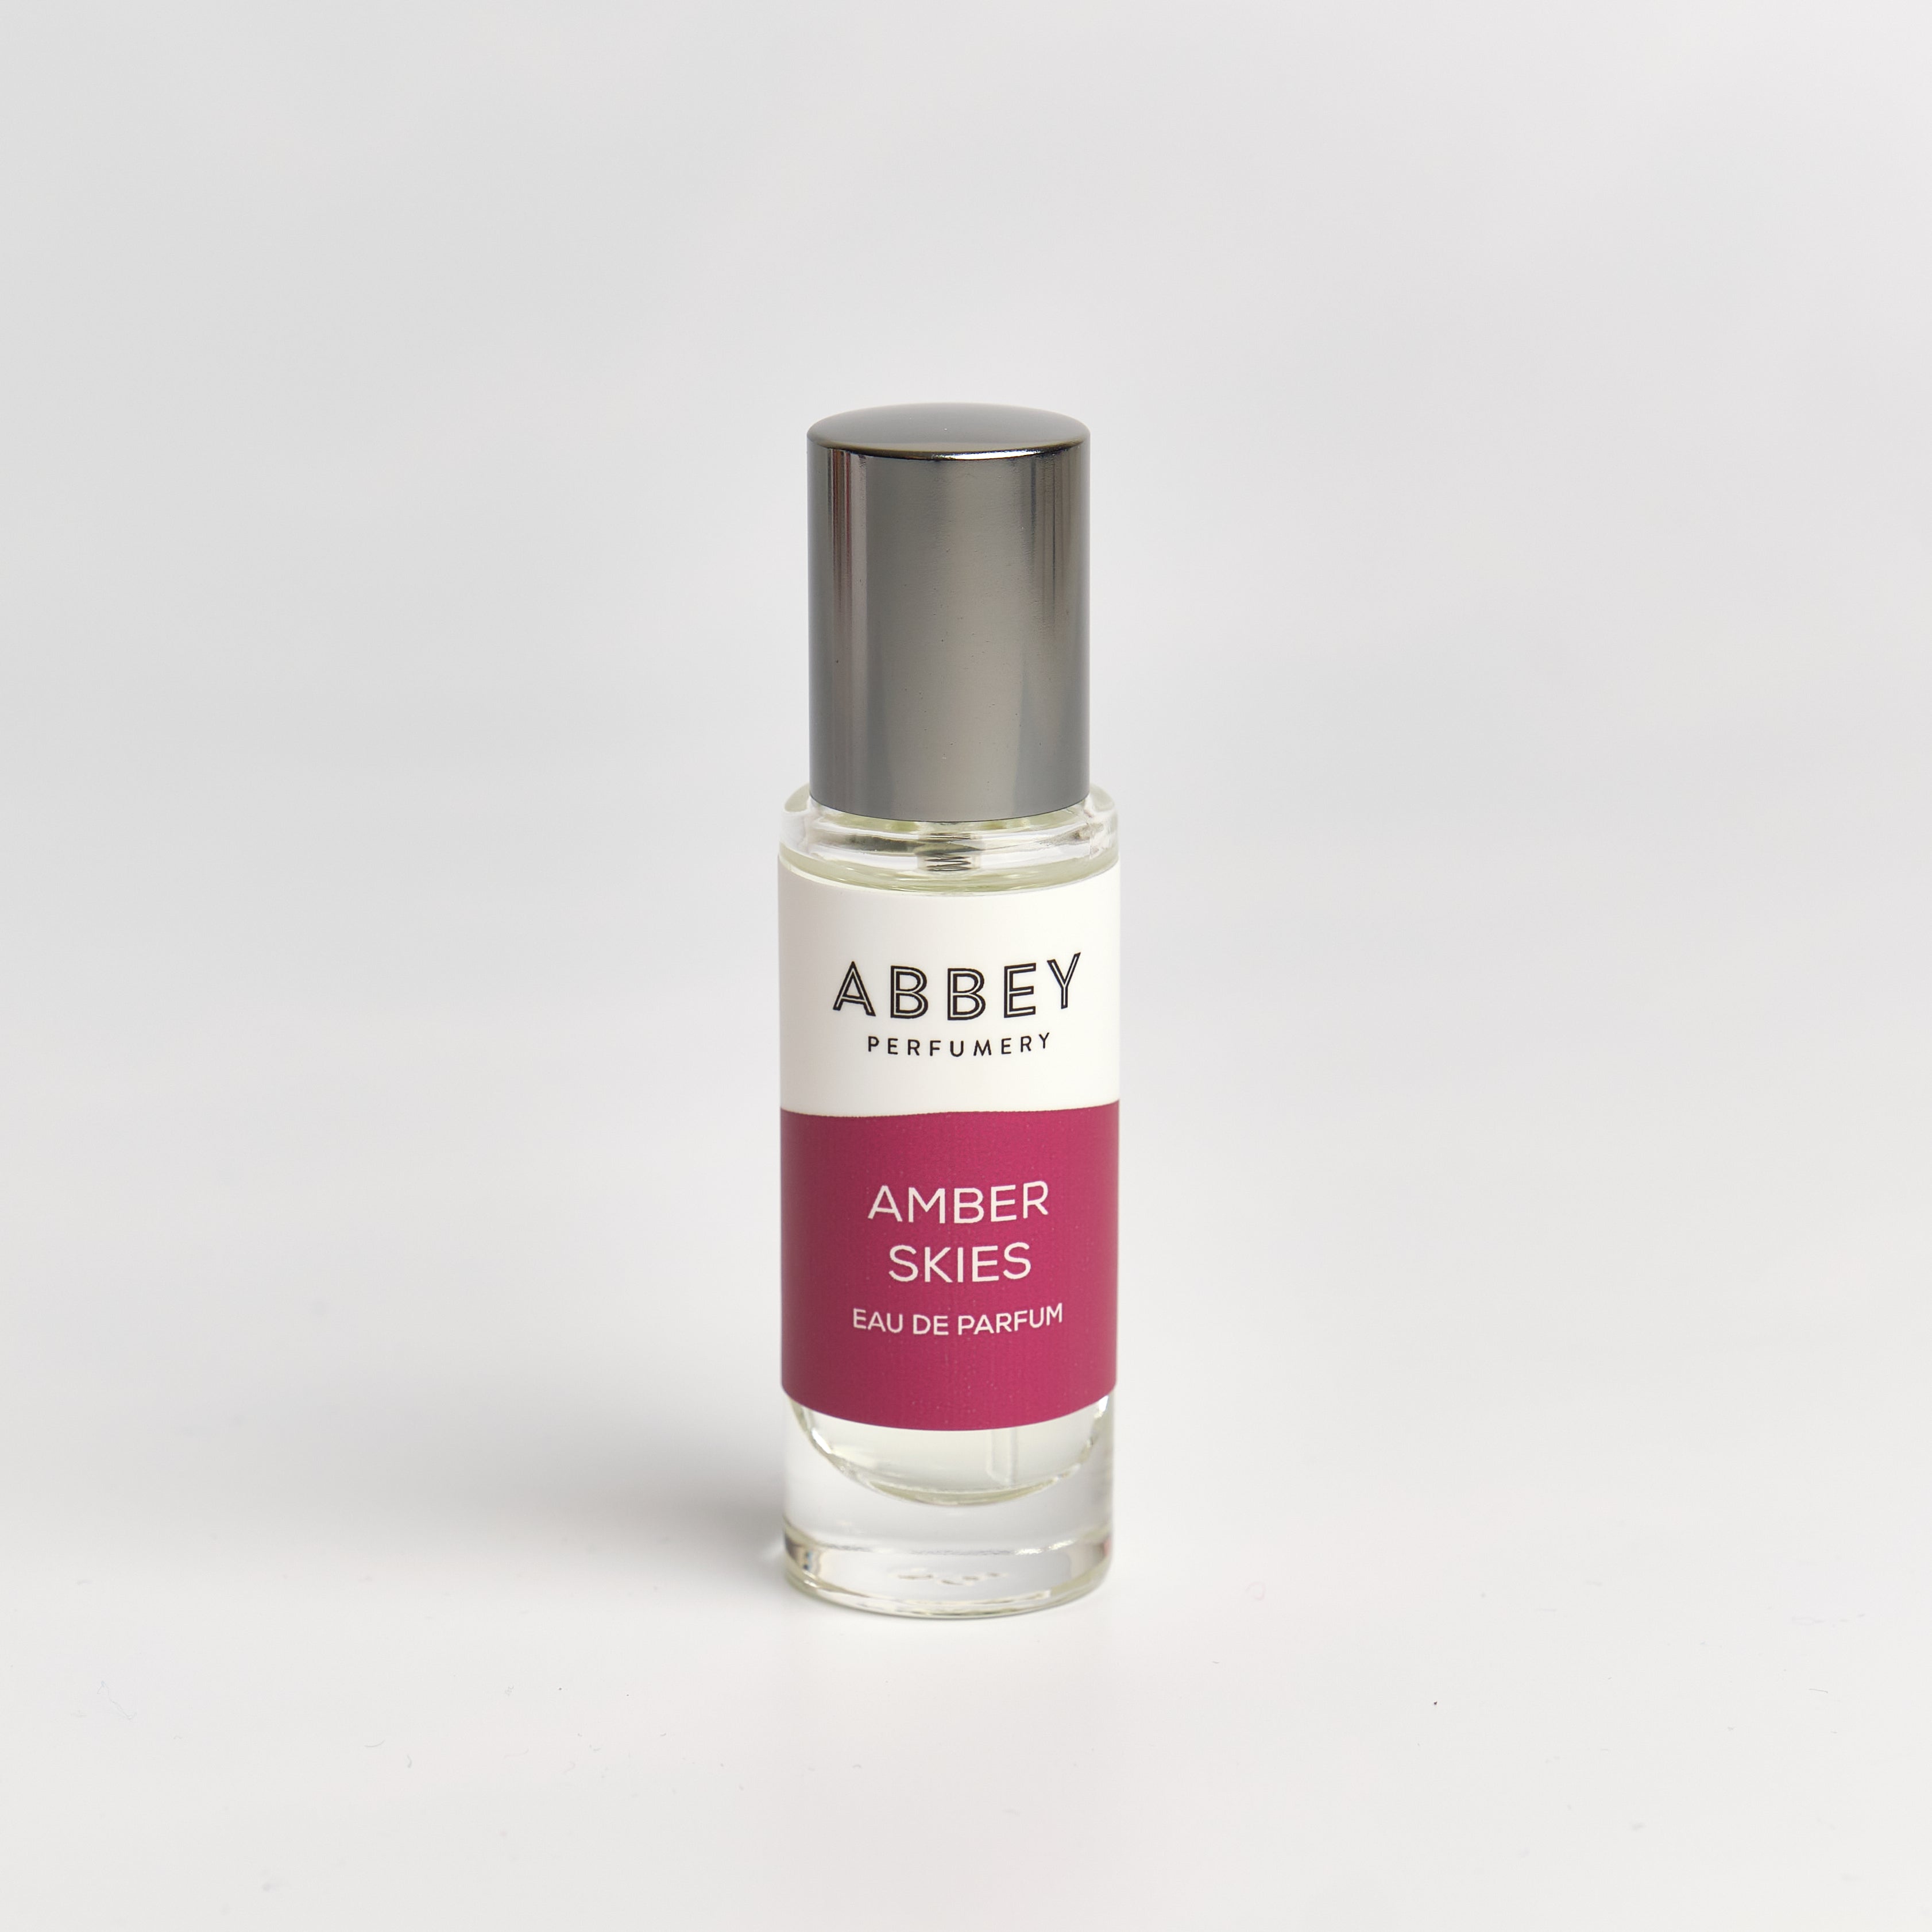 Amber Skies perfume bottle 10ml on white background